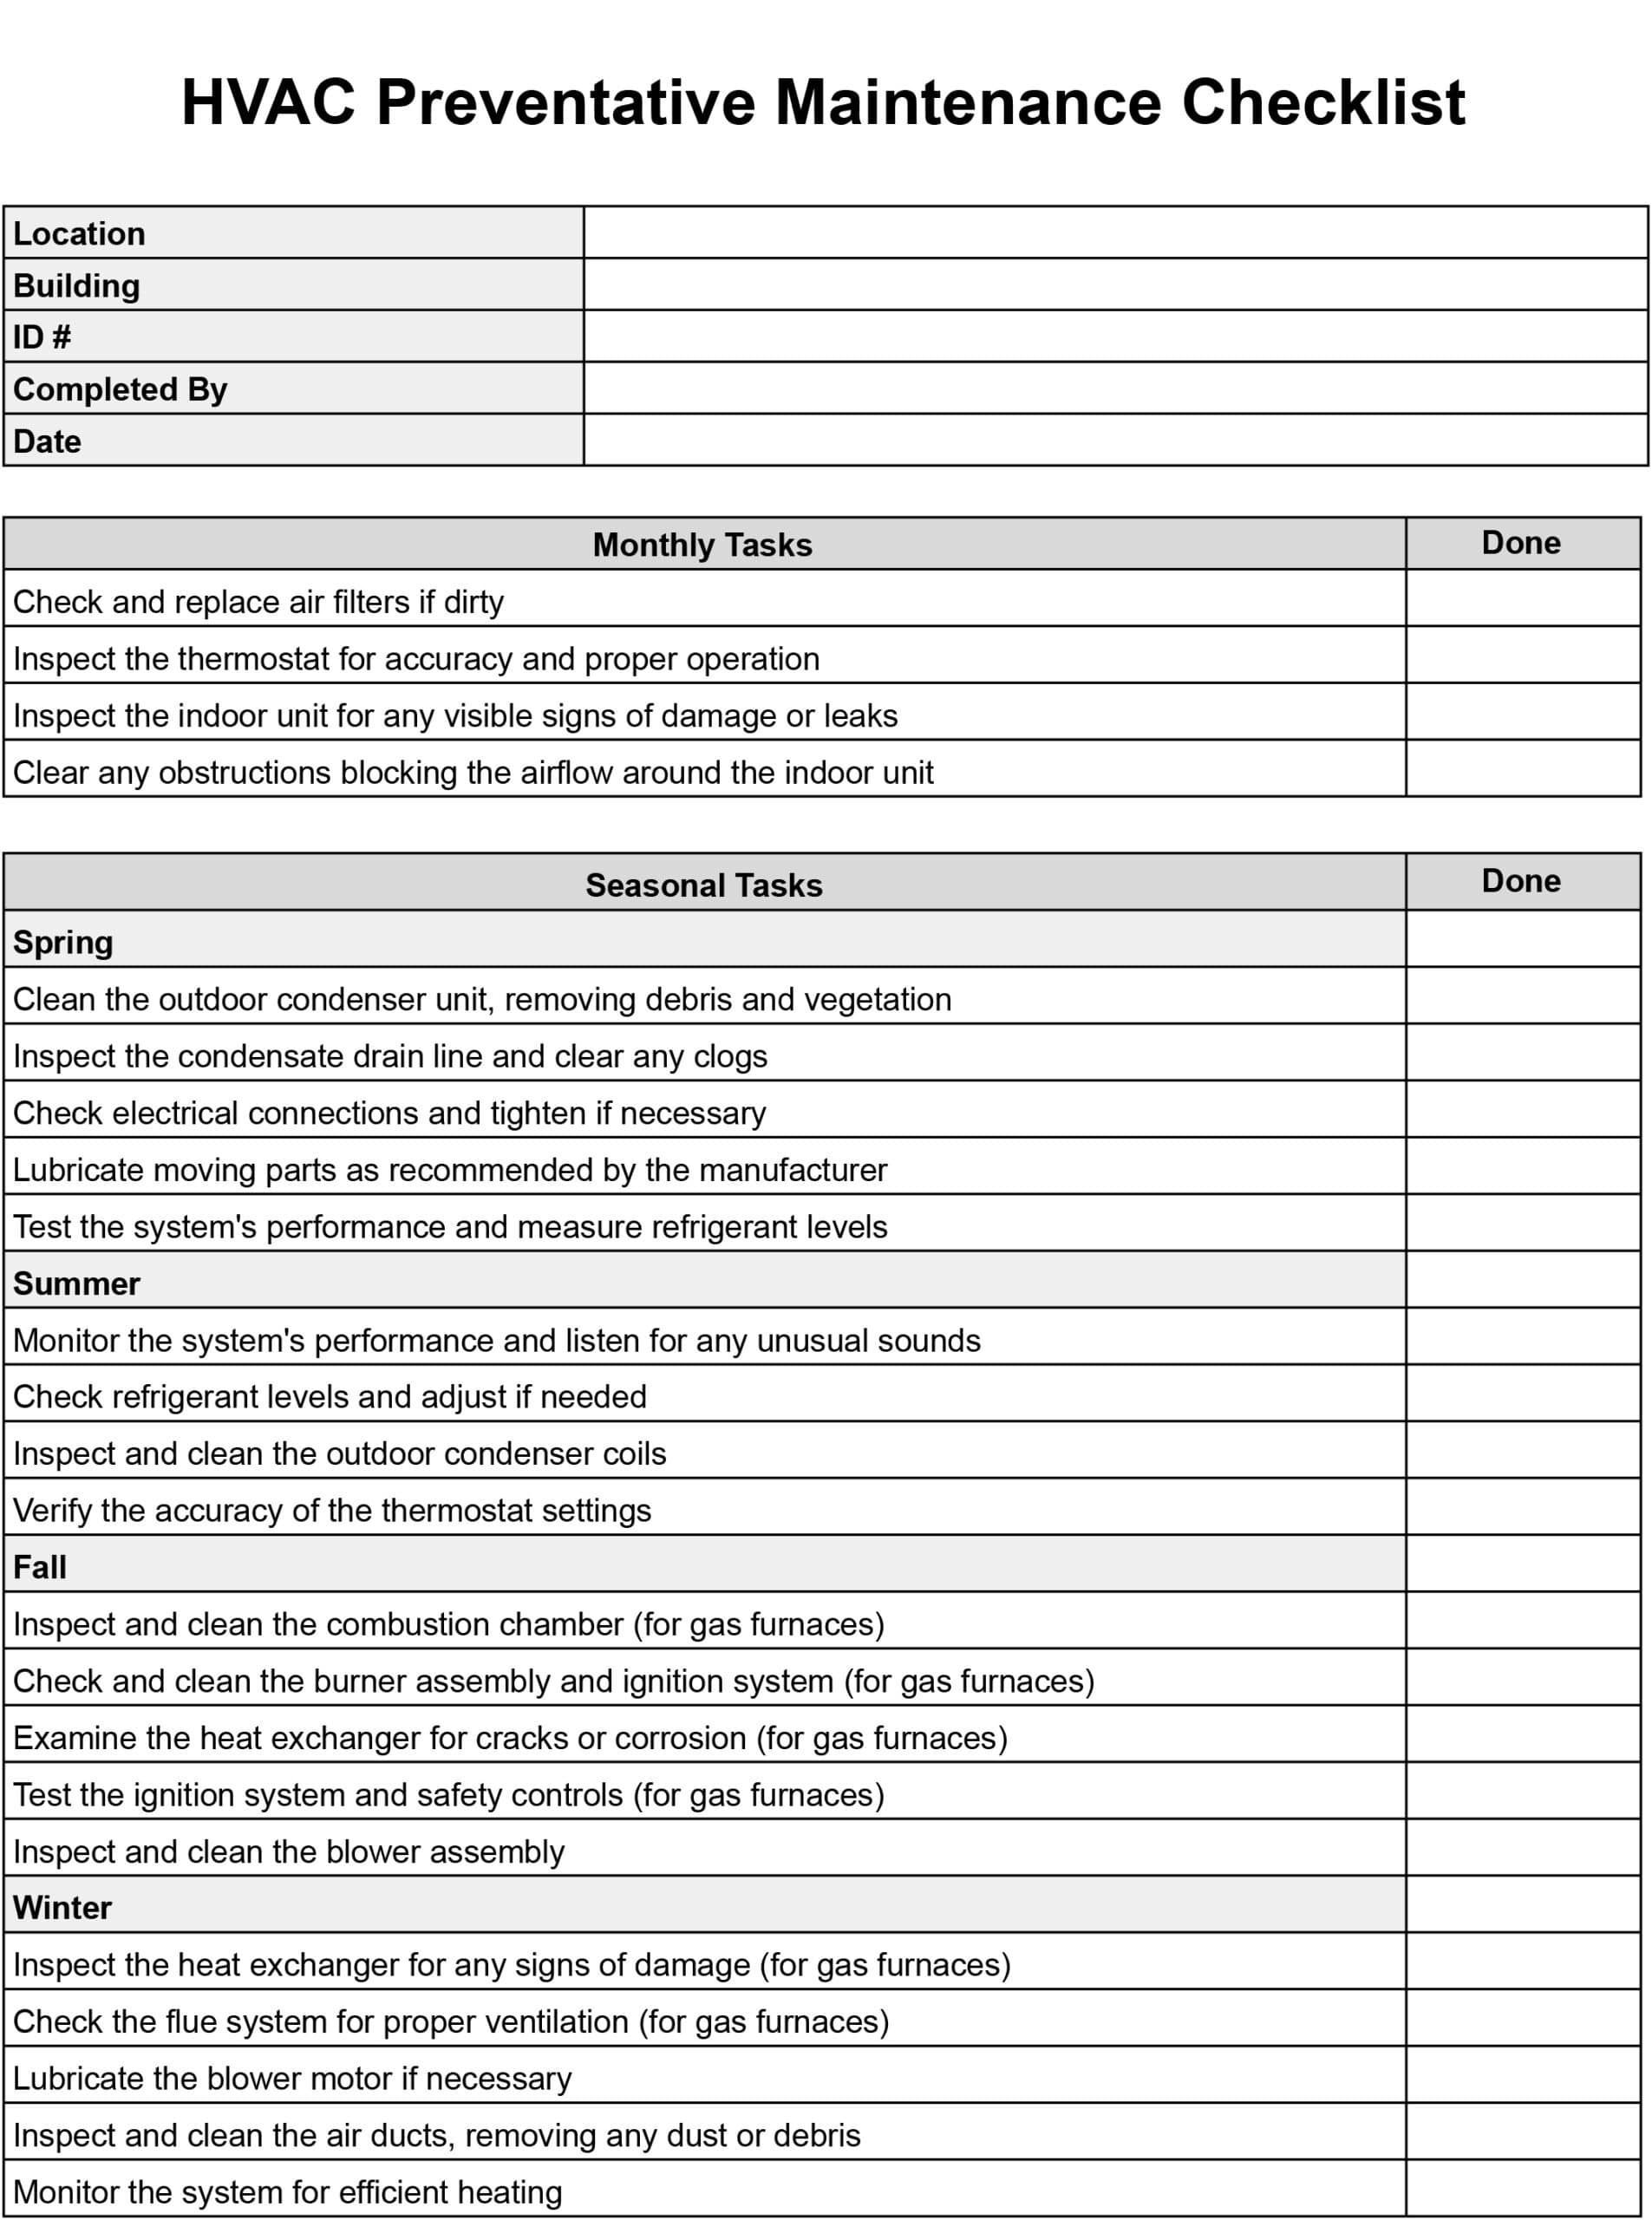 HVAC Maintenance Checklist Templates: Download Print for Free